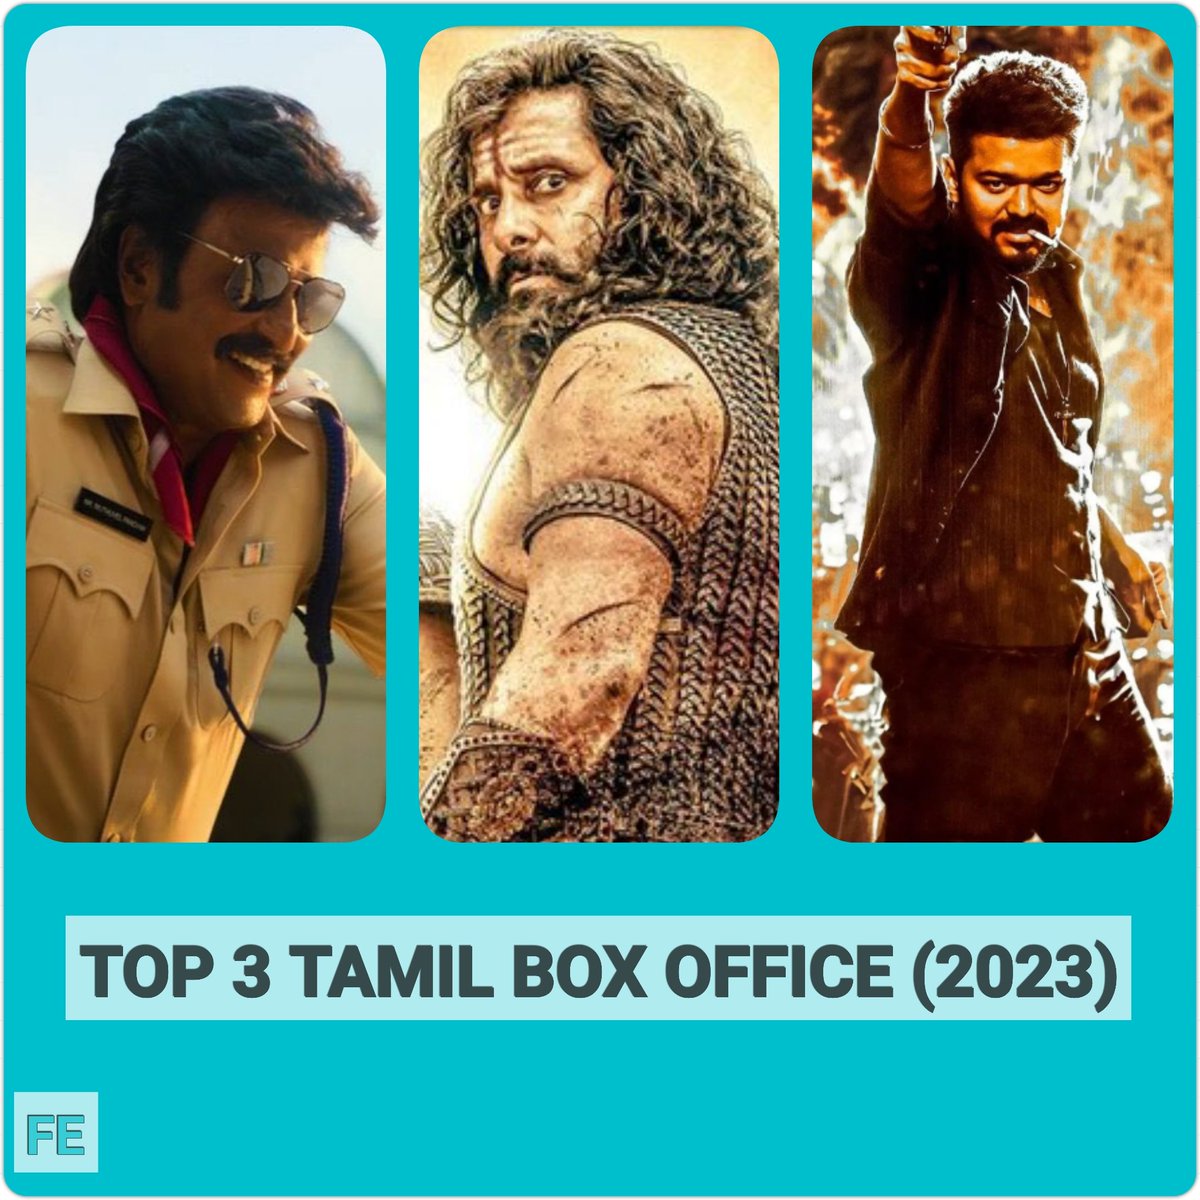 #FansExpress : Top 3 TN Box Office (2023) 

#Jailer #PonniyinSelvan2 #Leo 

@rajinikanth @chiyaan @actorvijay

#Rajinikanth #ChiyaanVikram #ThalapathyVijay